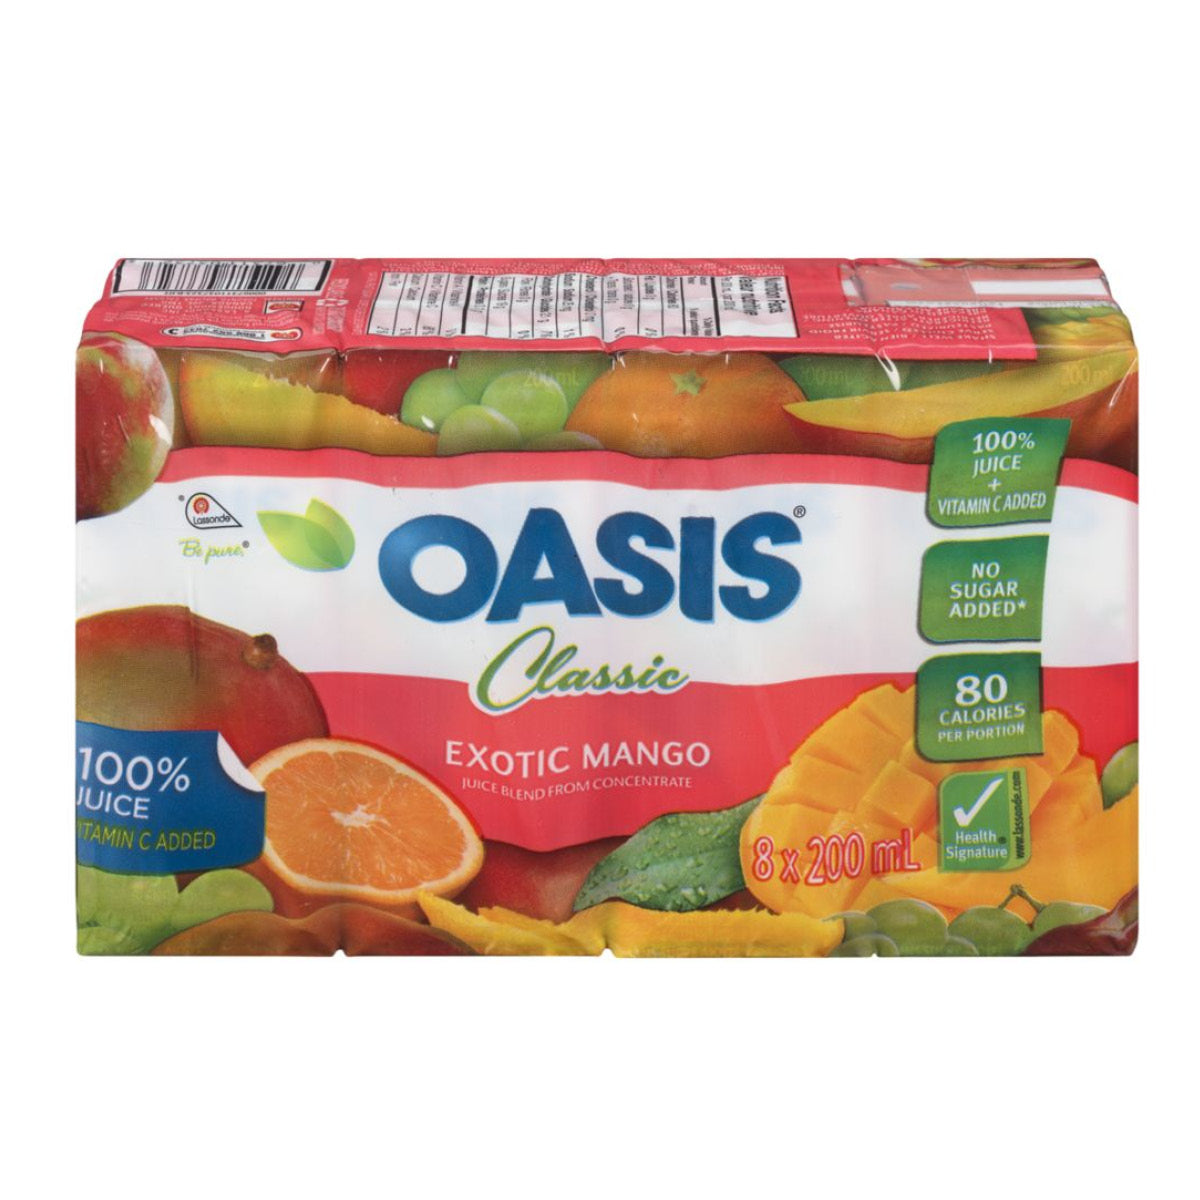 Oasis Juice Exotic Mango, 8x200ml